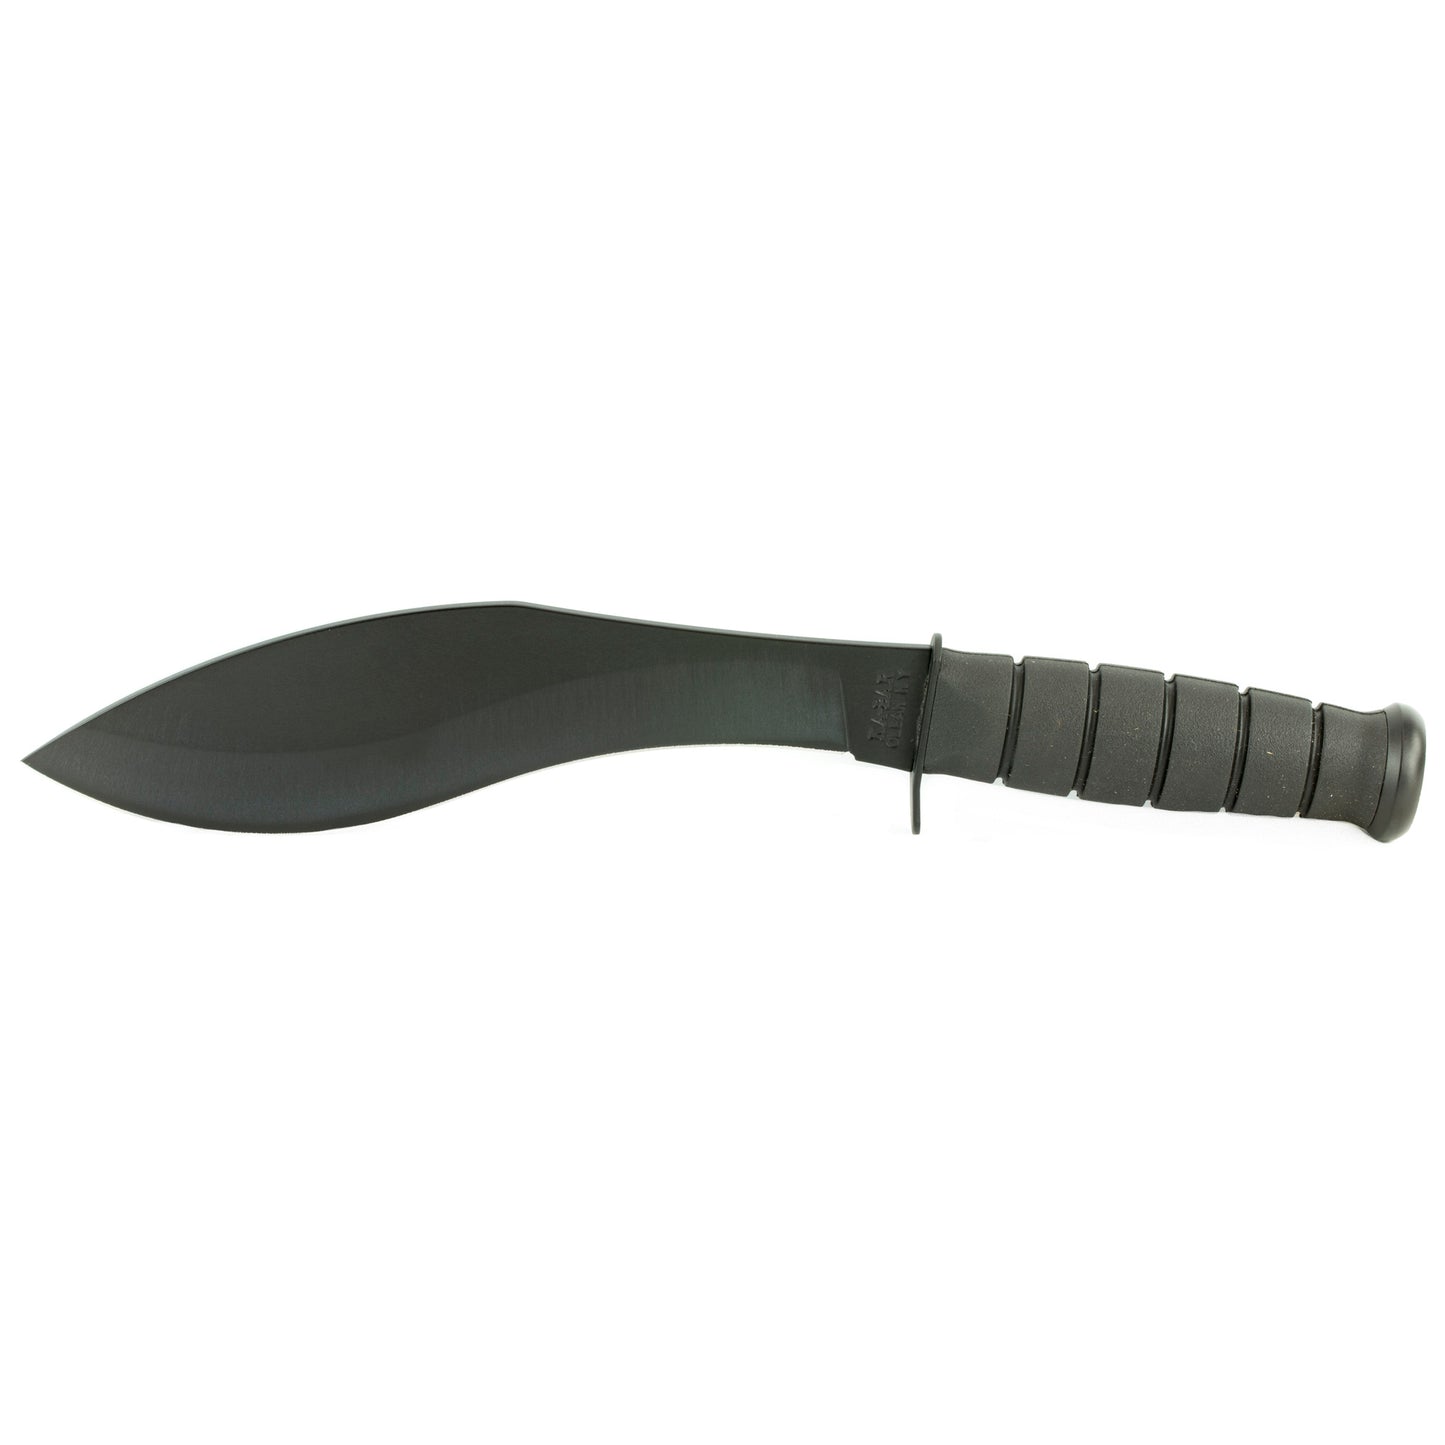 KABAR Combat Kukri Fixed Blade Knife 8.5" Blade 13.3" Kraton Plain Edge 1280 - California Shooting Supplies